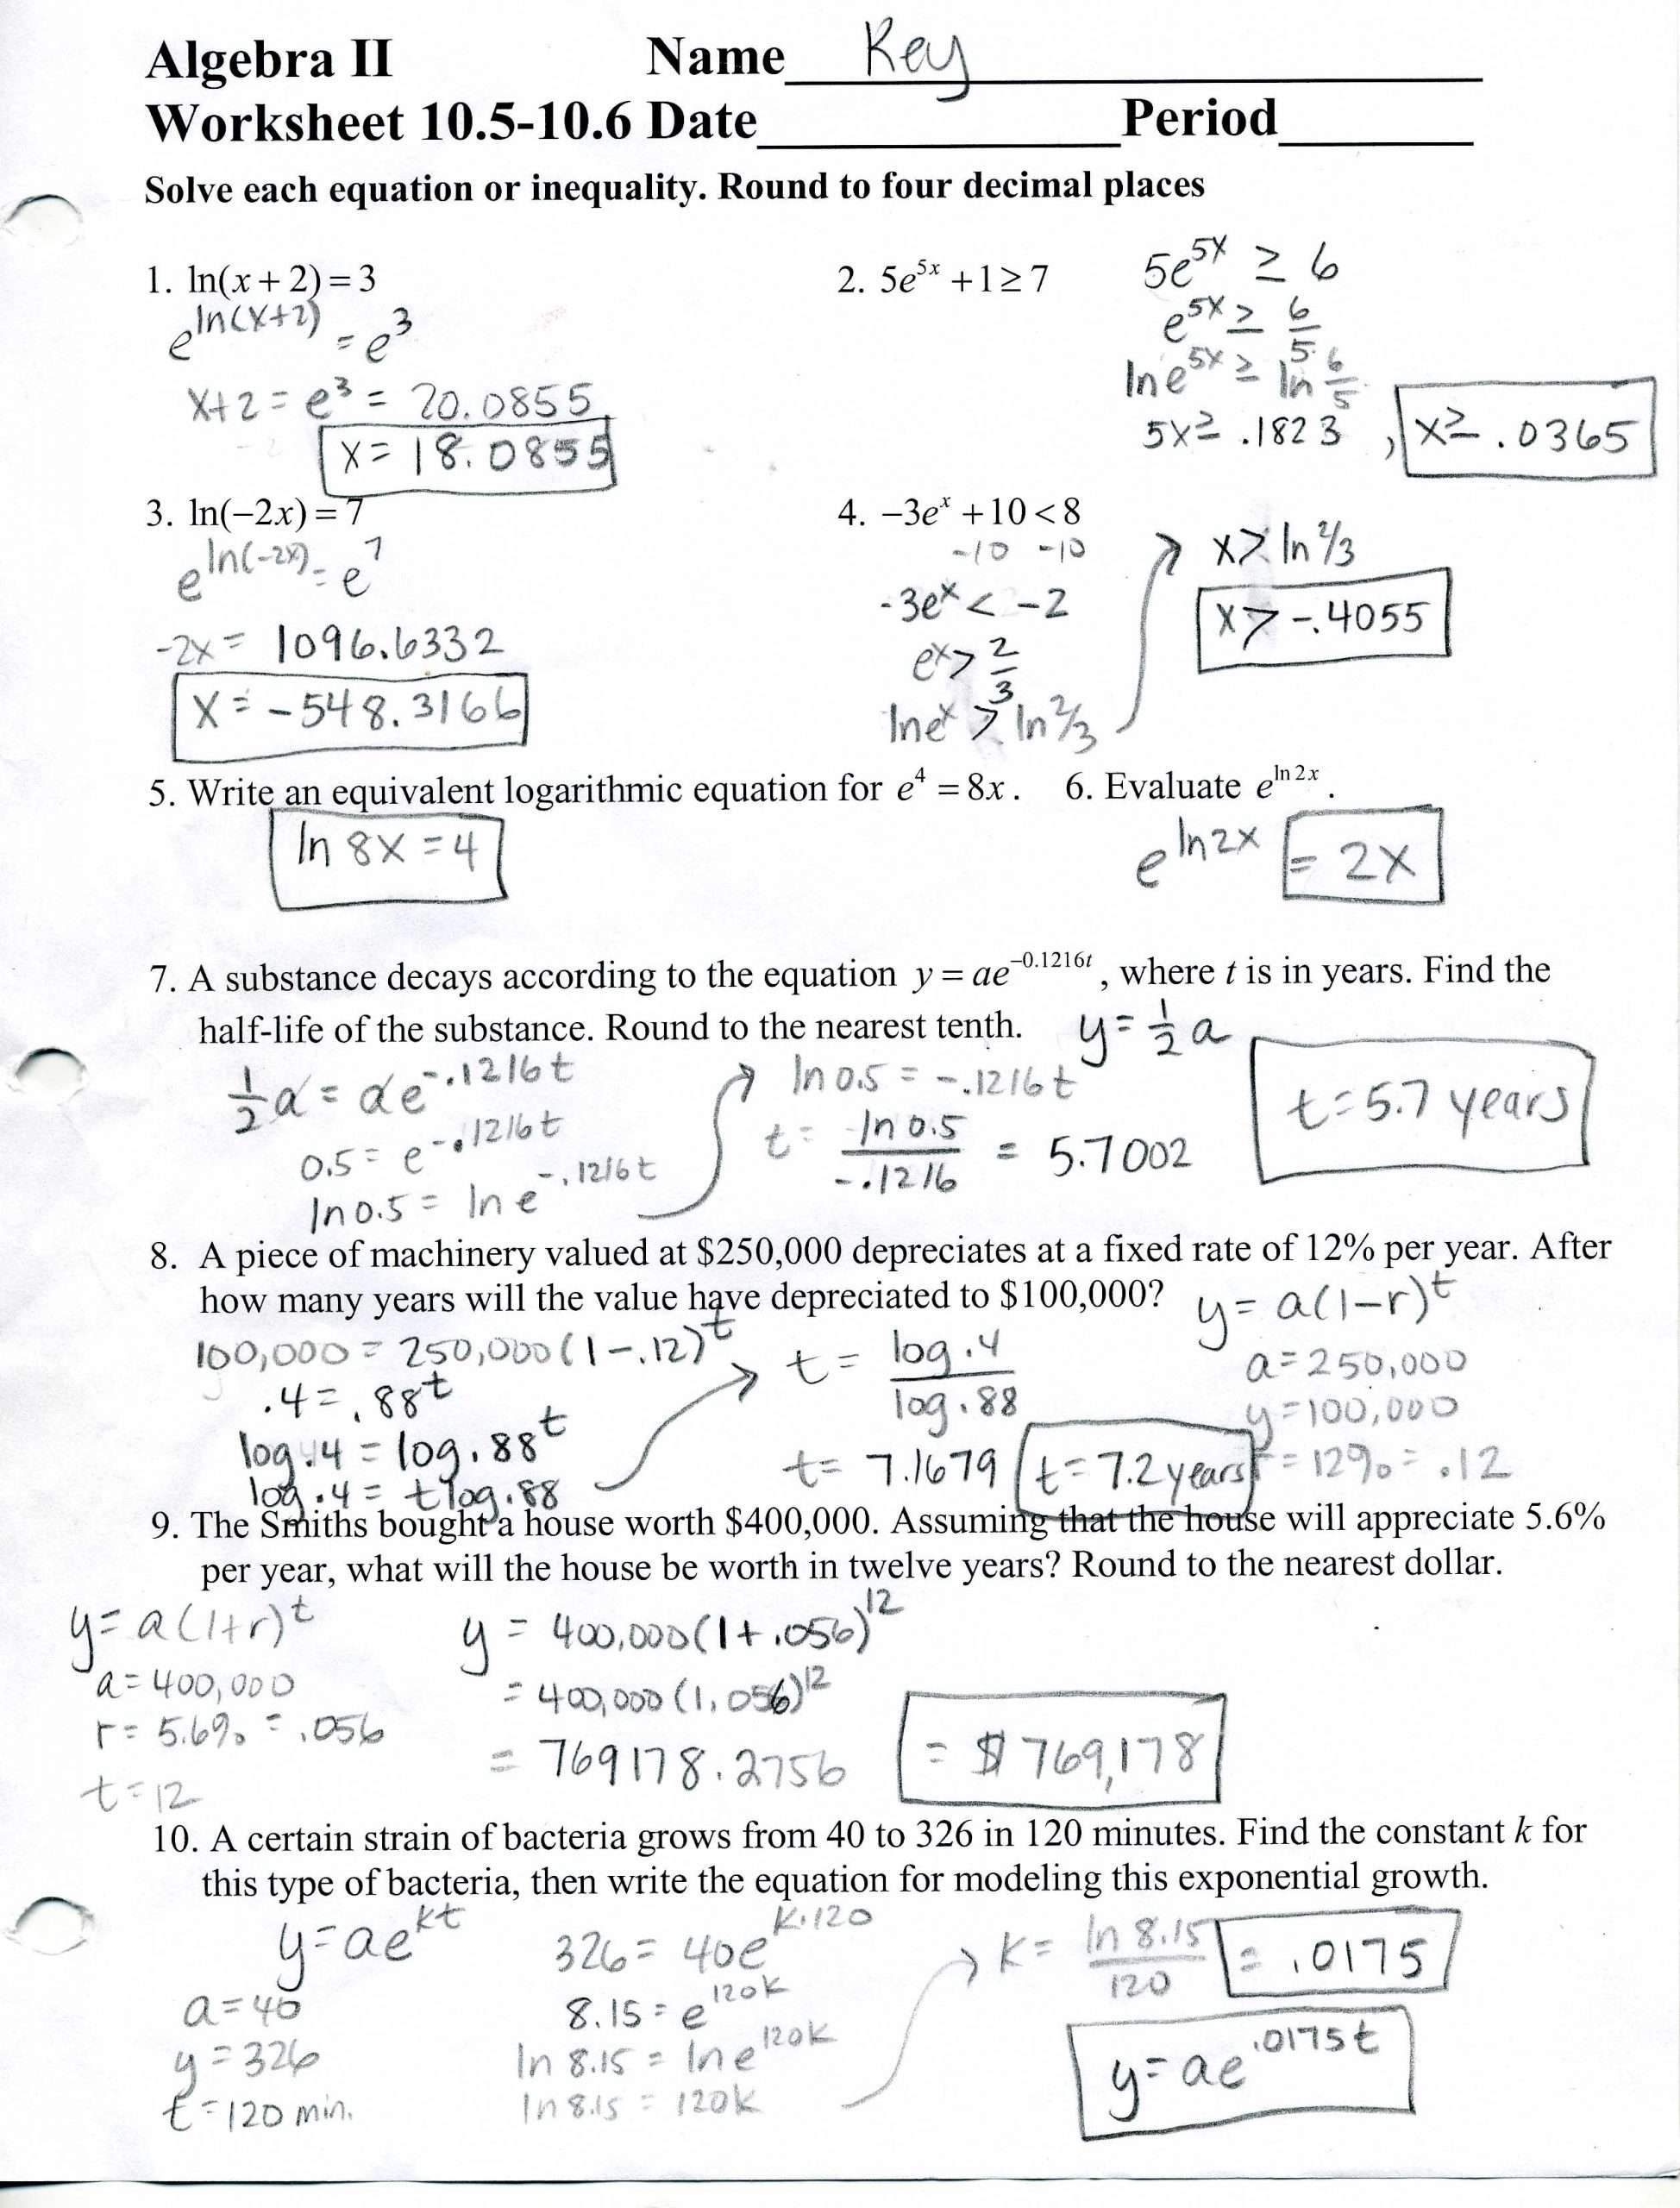 Algebra 2 Worksheet Answers